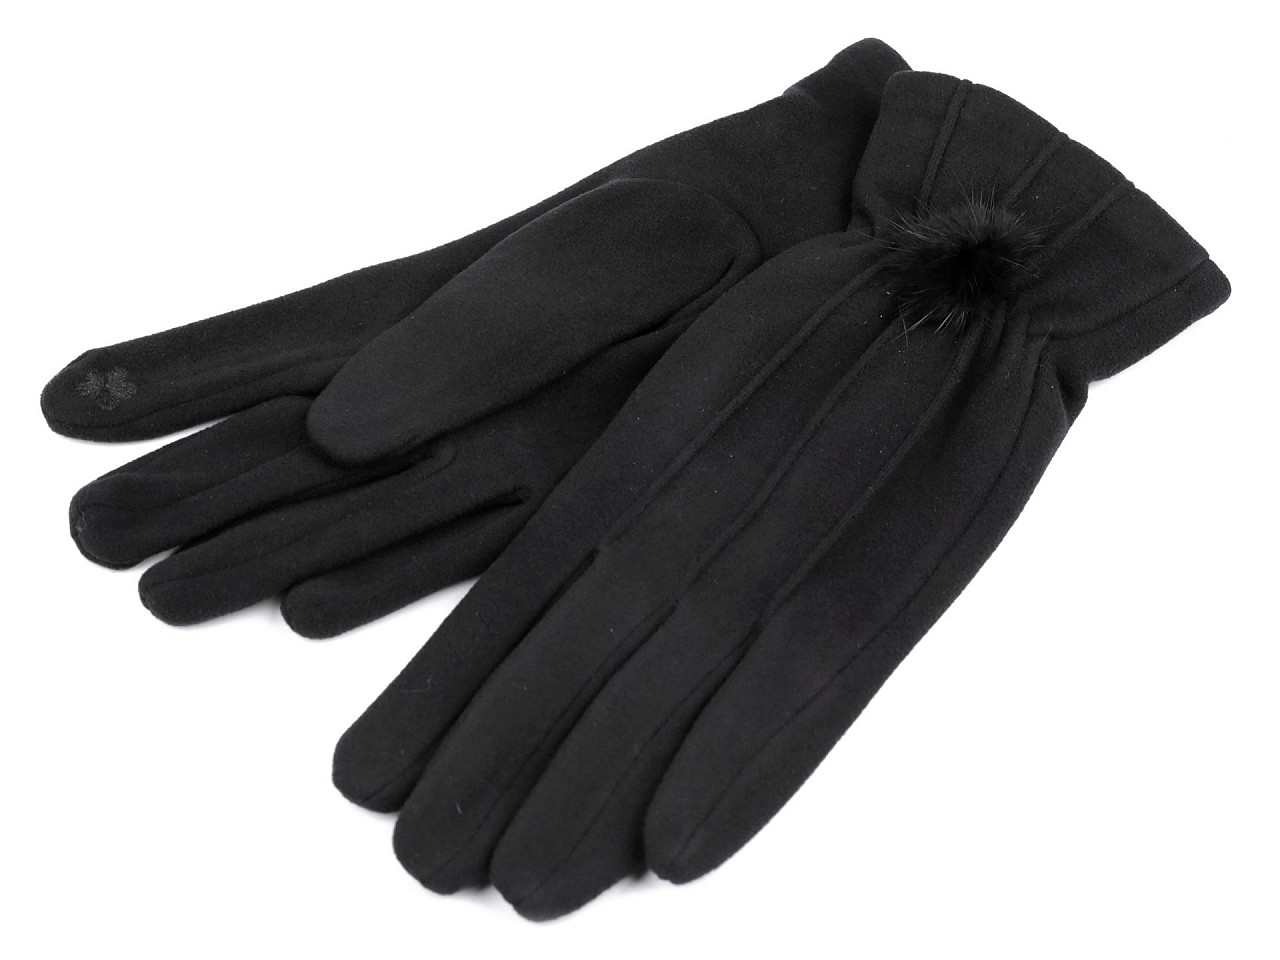 Damenhandschuhe mit Fellbommel, Touchscreen-fähig, schwarz, 1 Paar